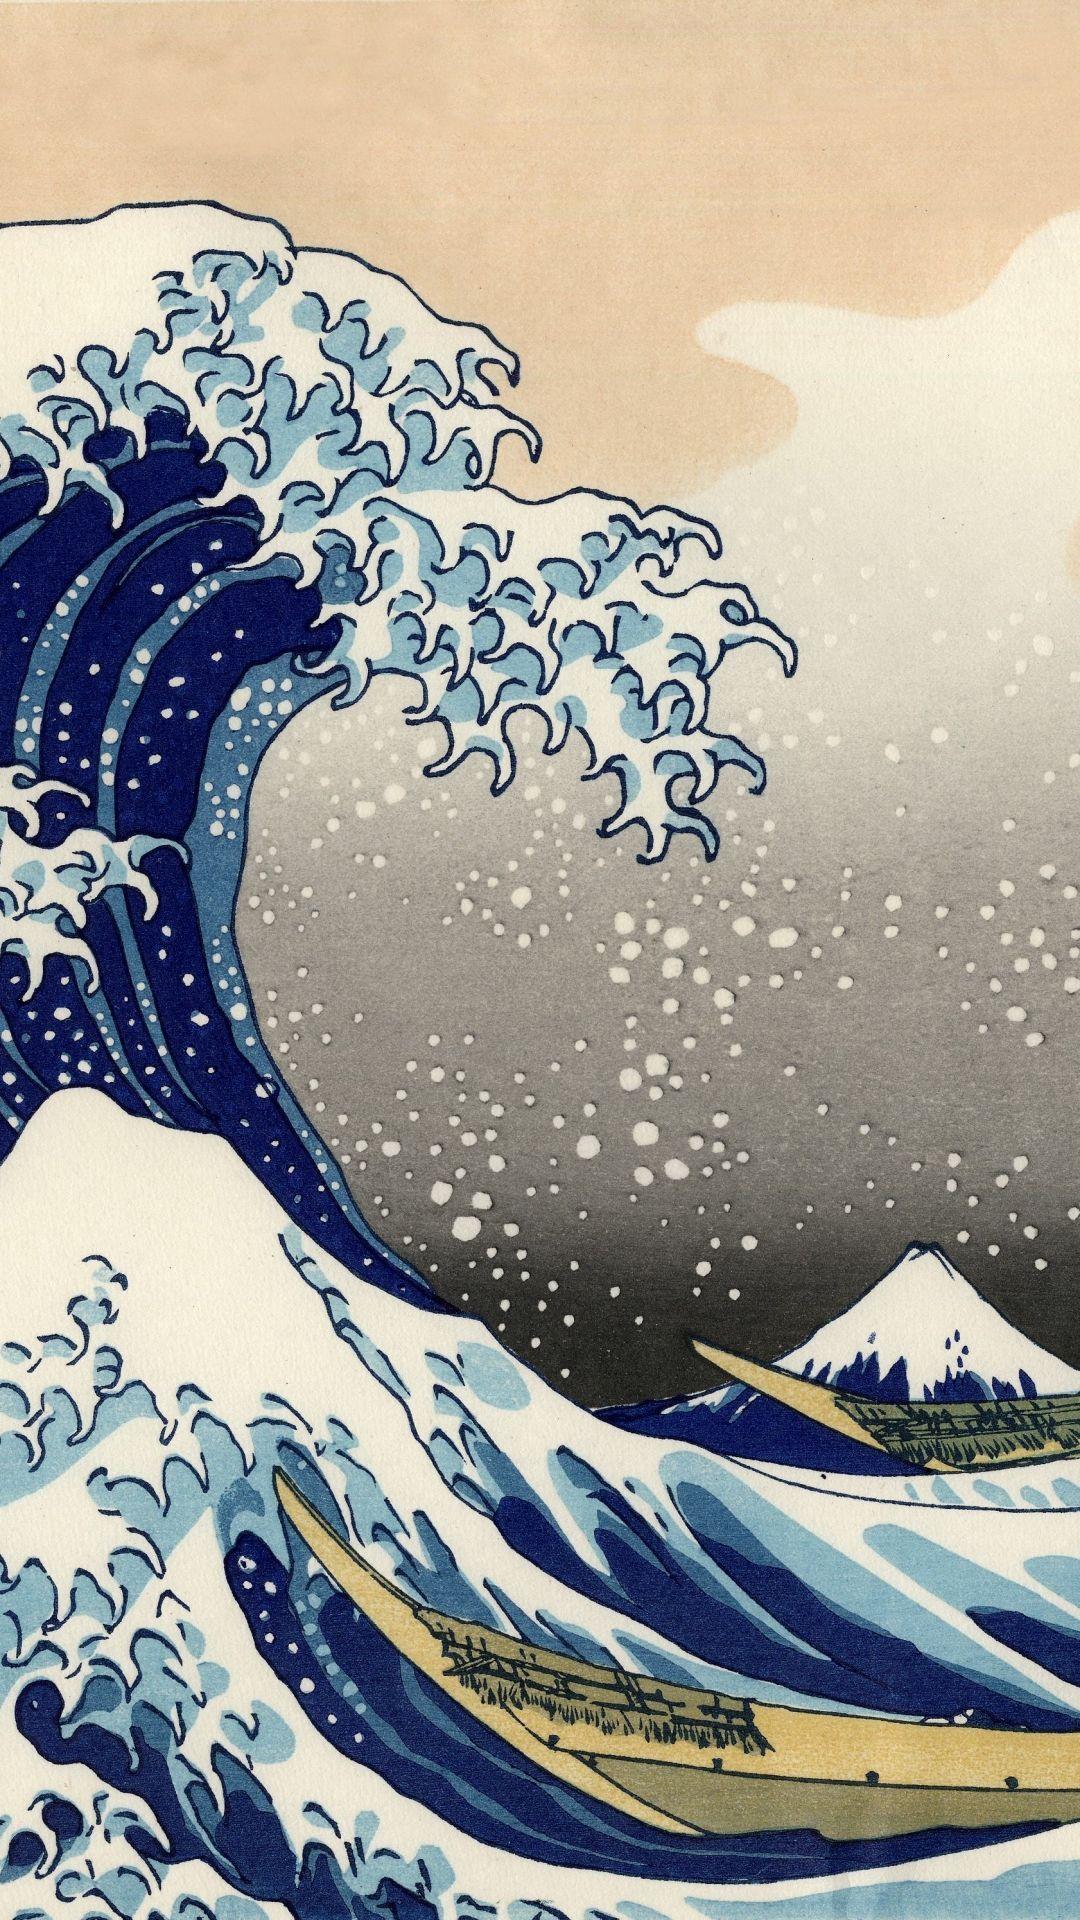 Artistic The Great Wave Off Kanagawa. Japanese Art, Art Wallpaper, Waves Wallpaper